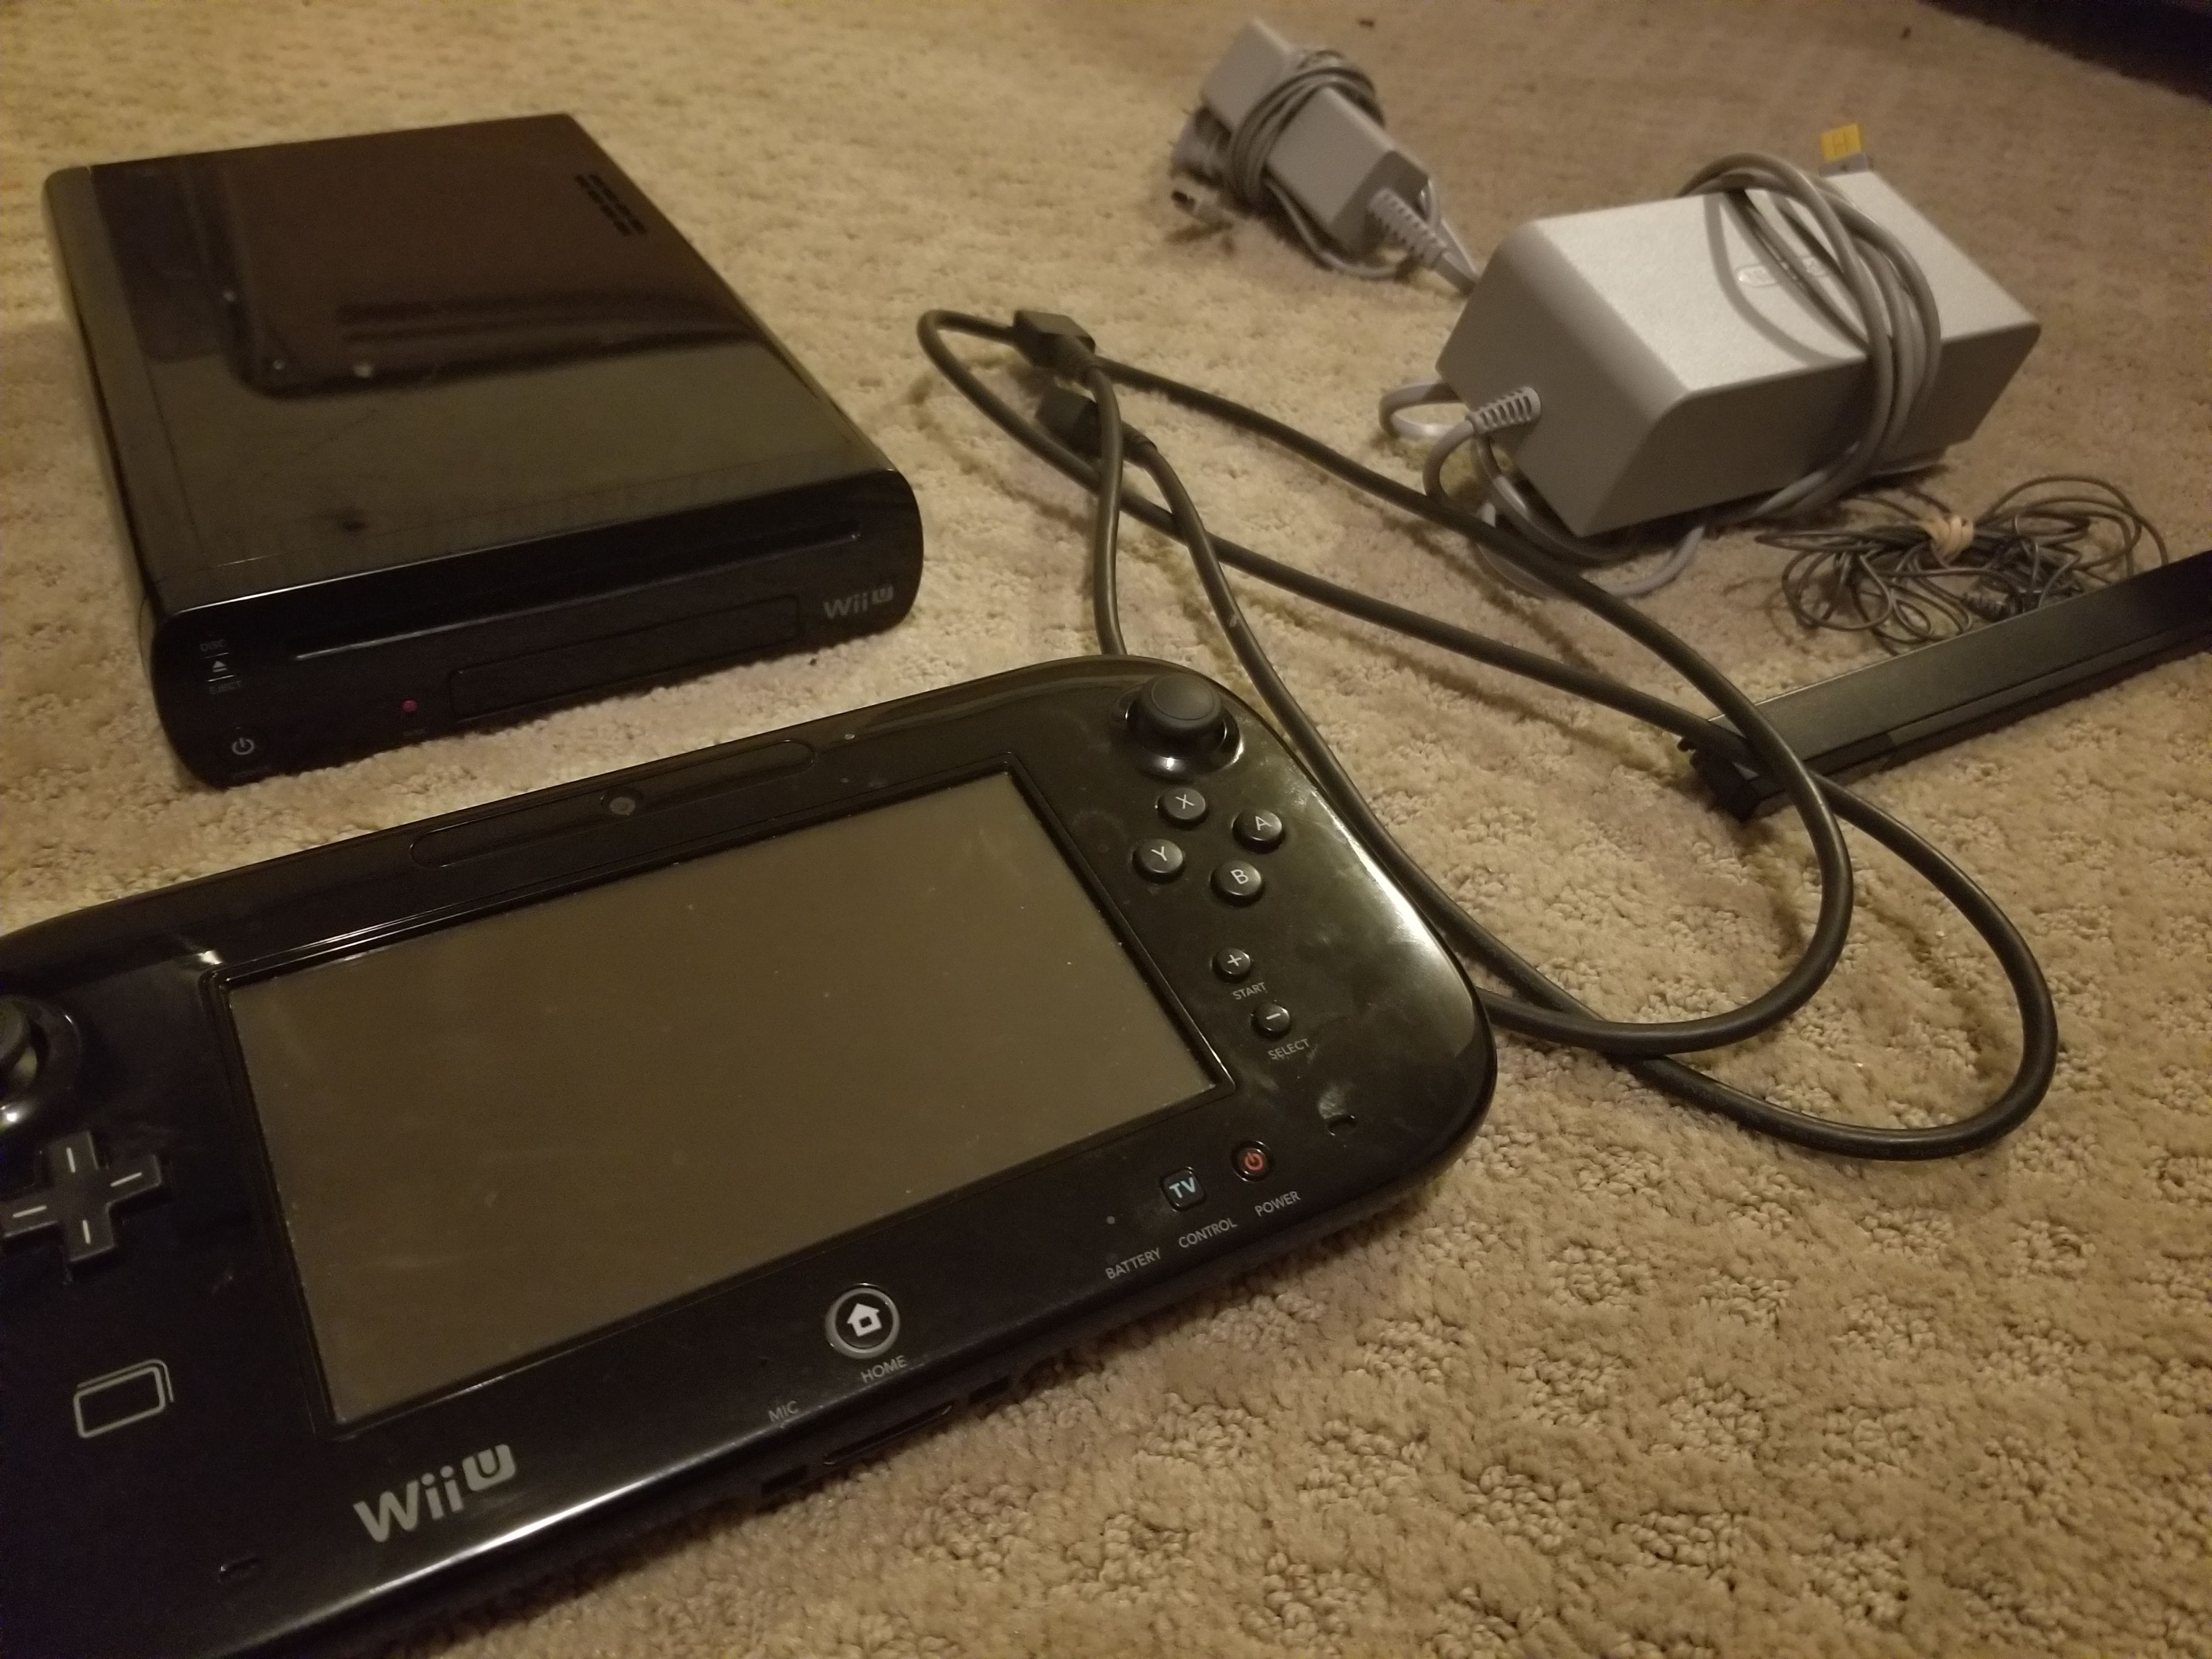 Nintendo Wii U -Deluxe Edition (32GB)